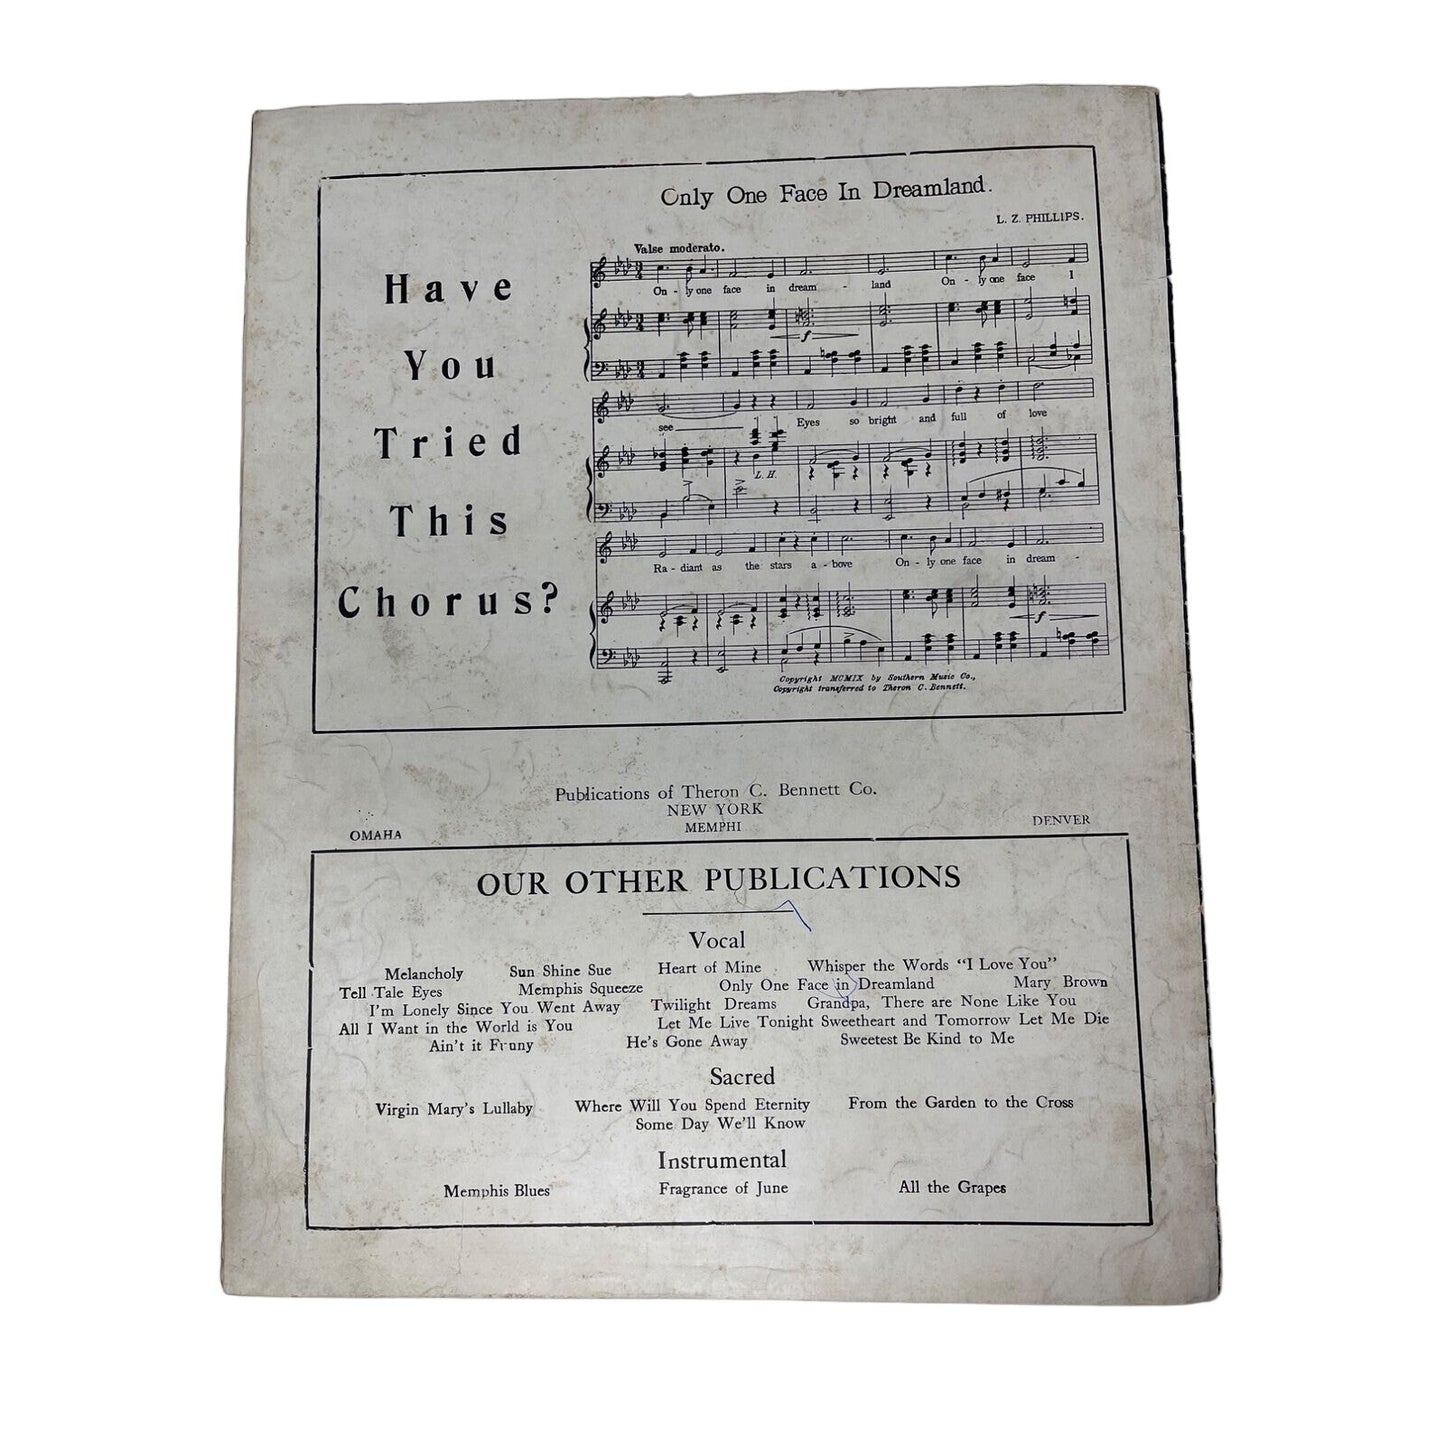 Melancholy Baby Sheet Music 1912 Geo A Norton Ernie Burnett